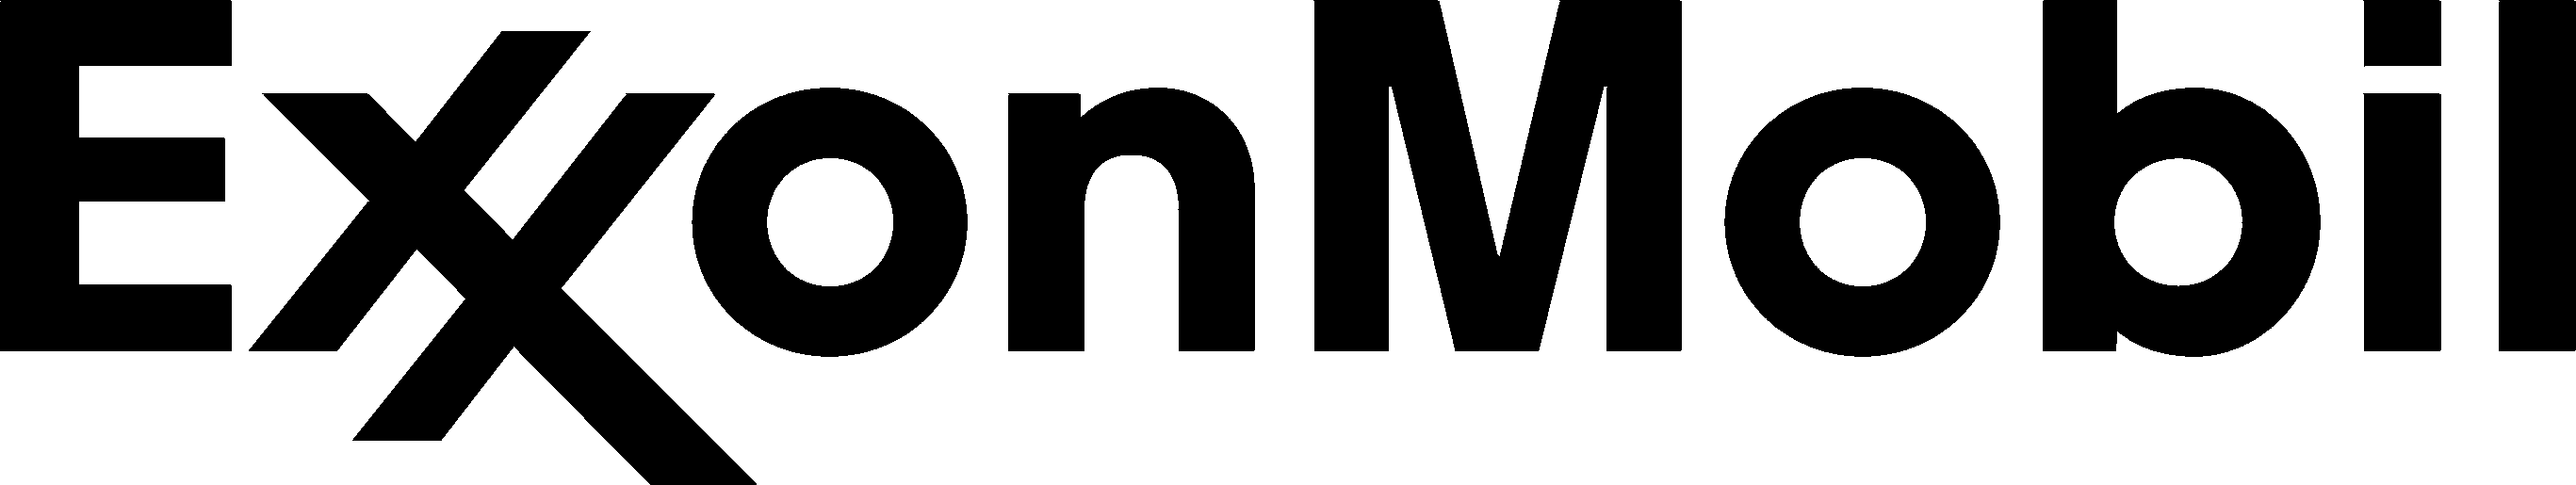 ExxonMobil_logo.gif (15760 bytes)